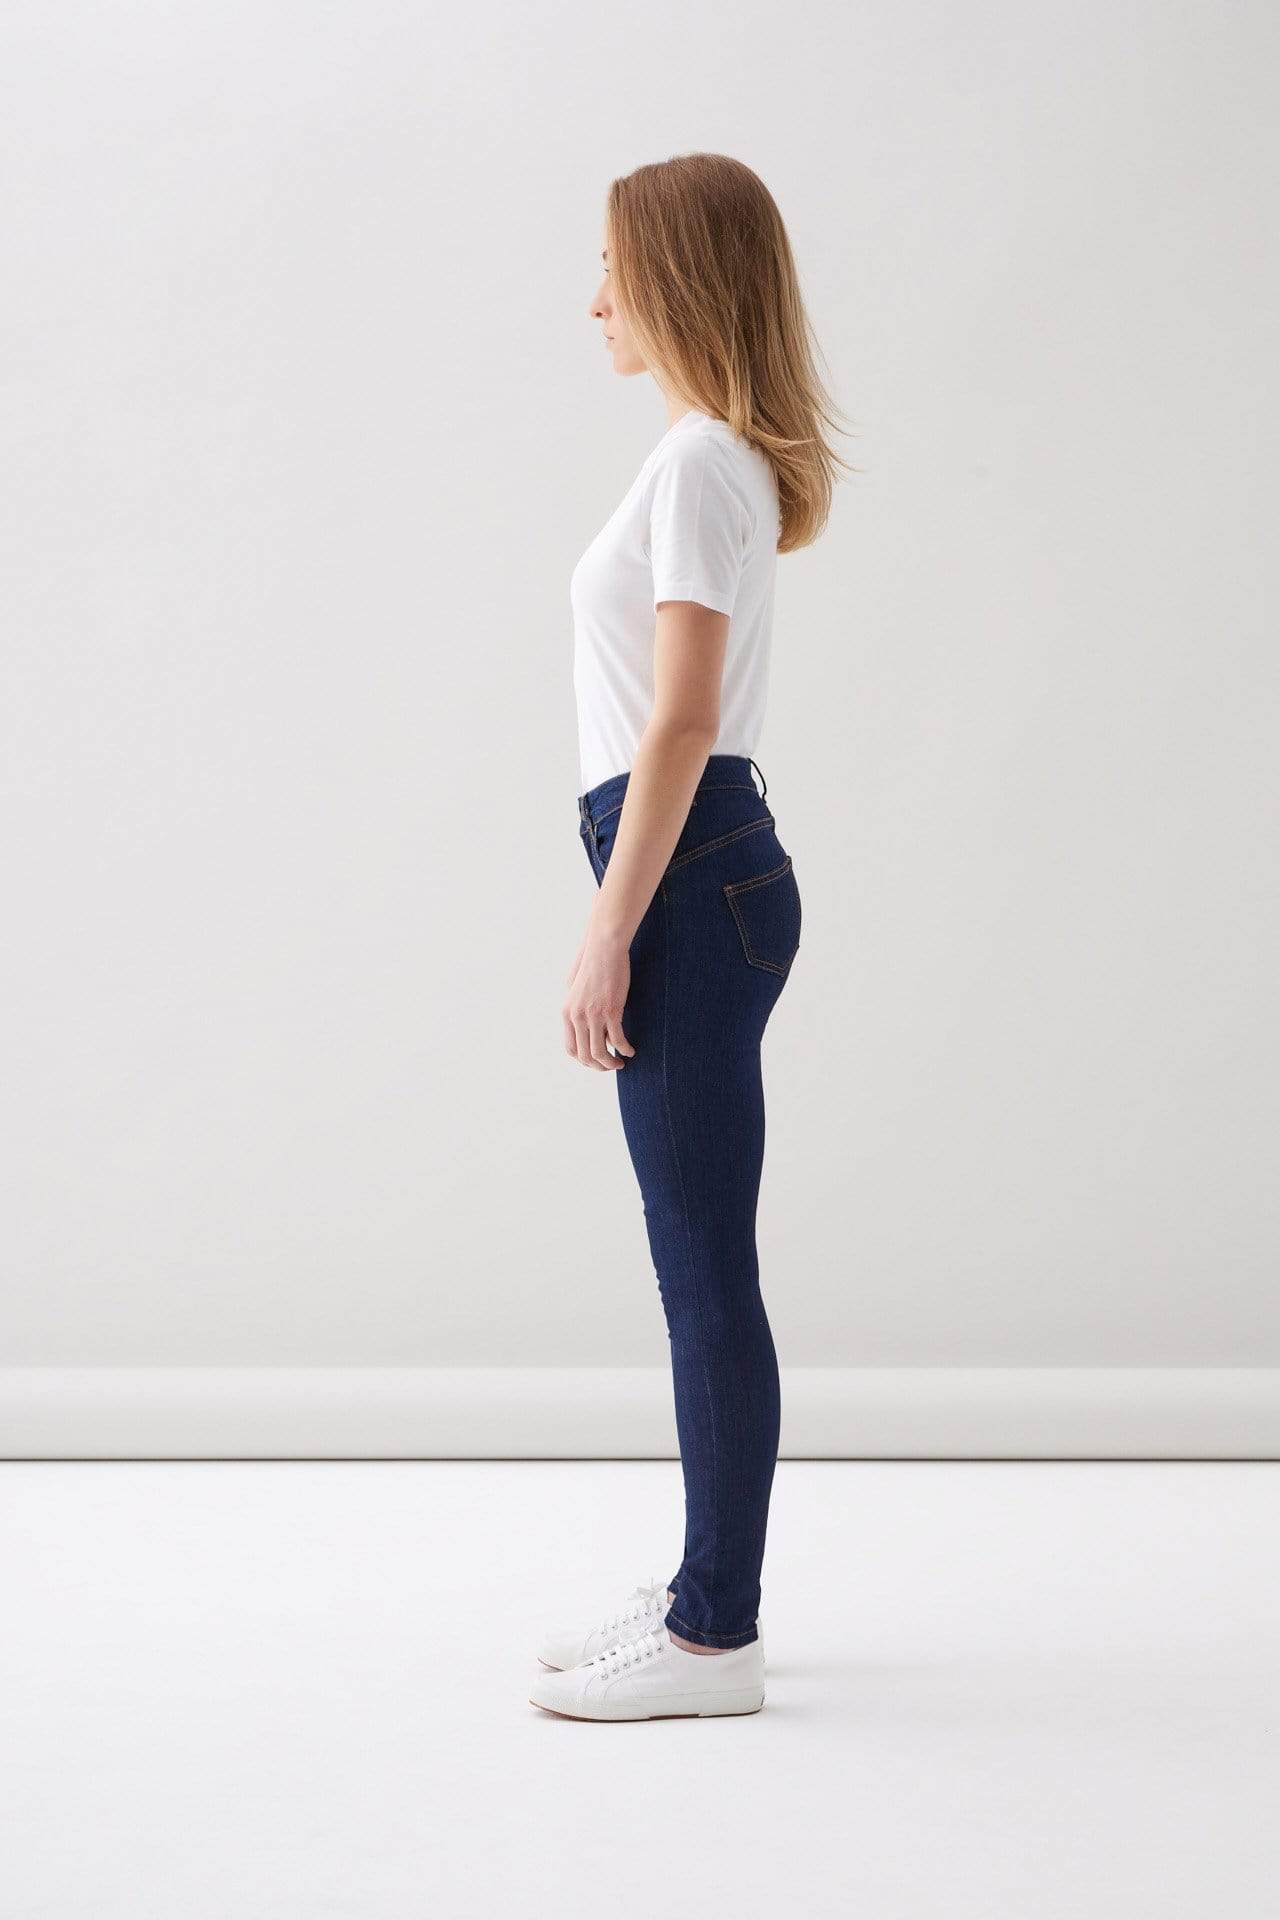 Par.co DENIM Jeans Mujer Lily Dark Skinny Jeans moda sostenible moda ética